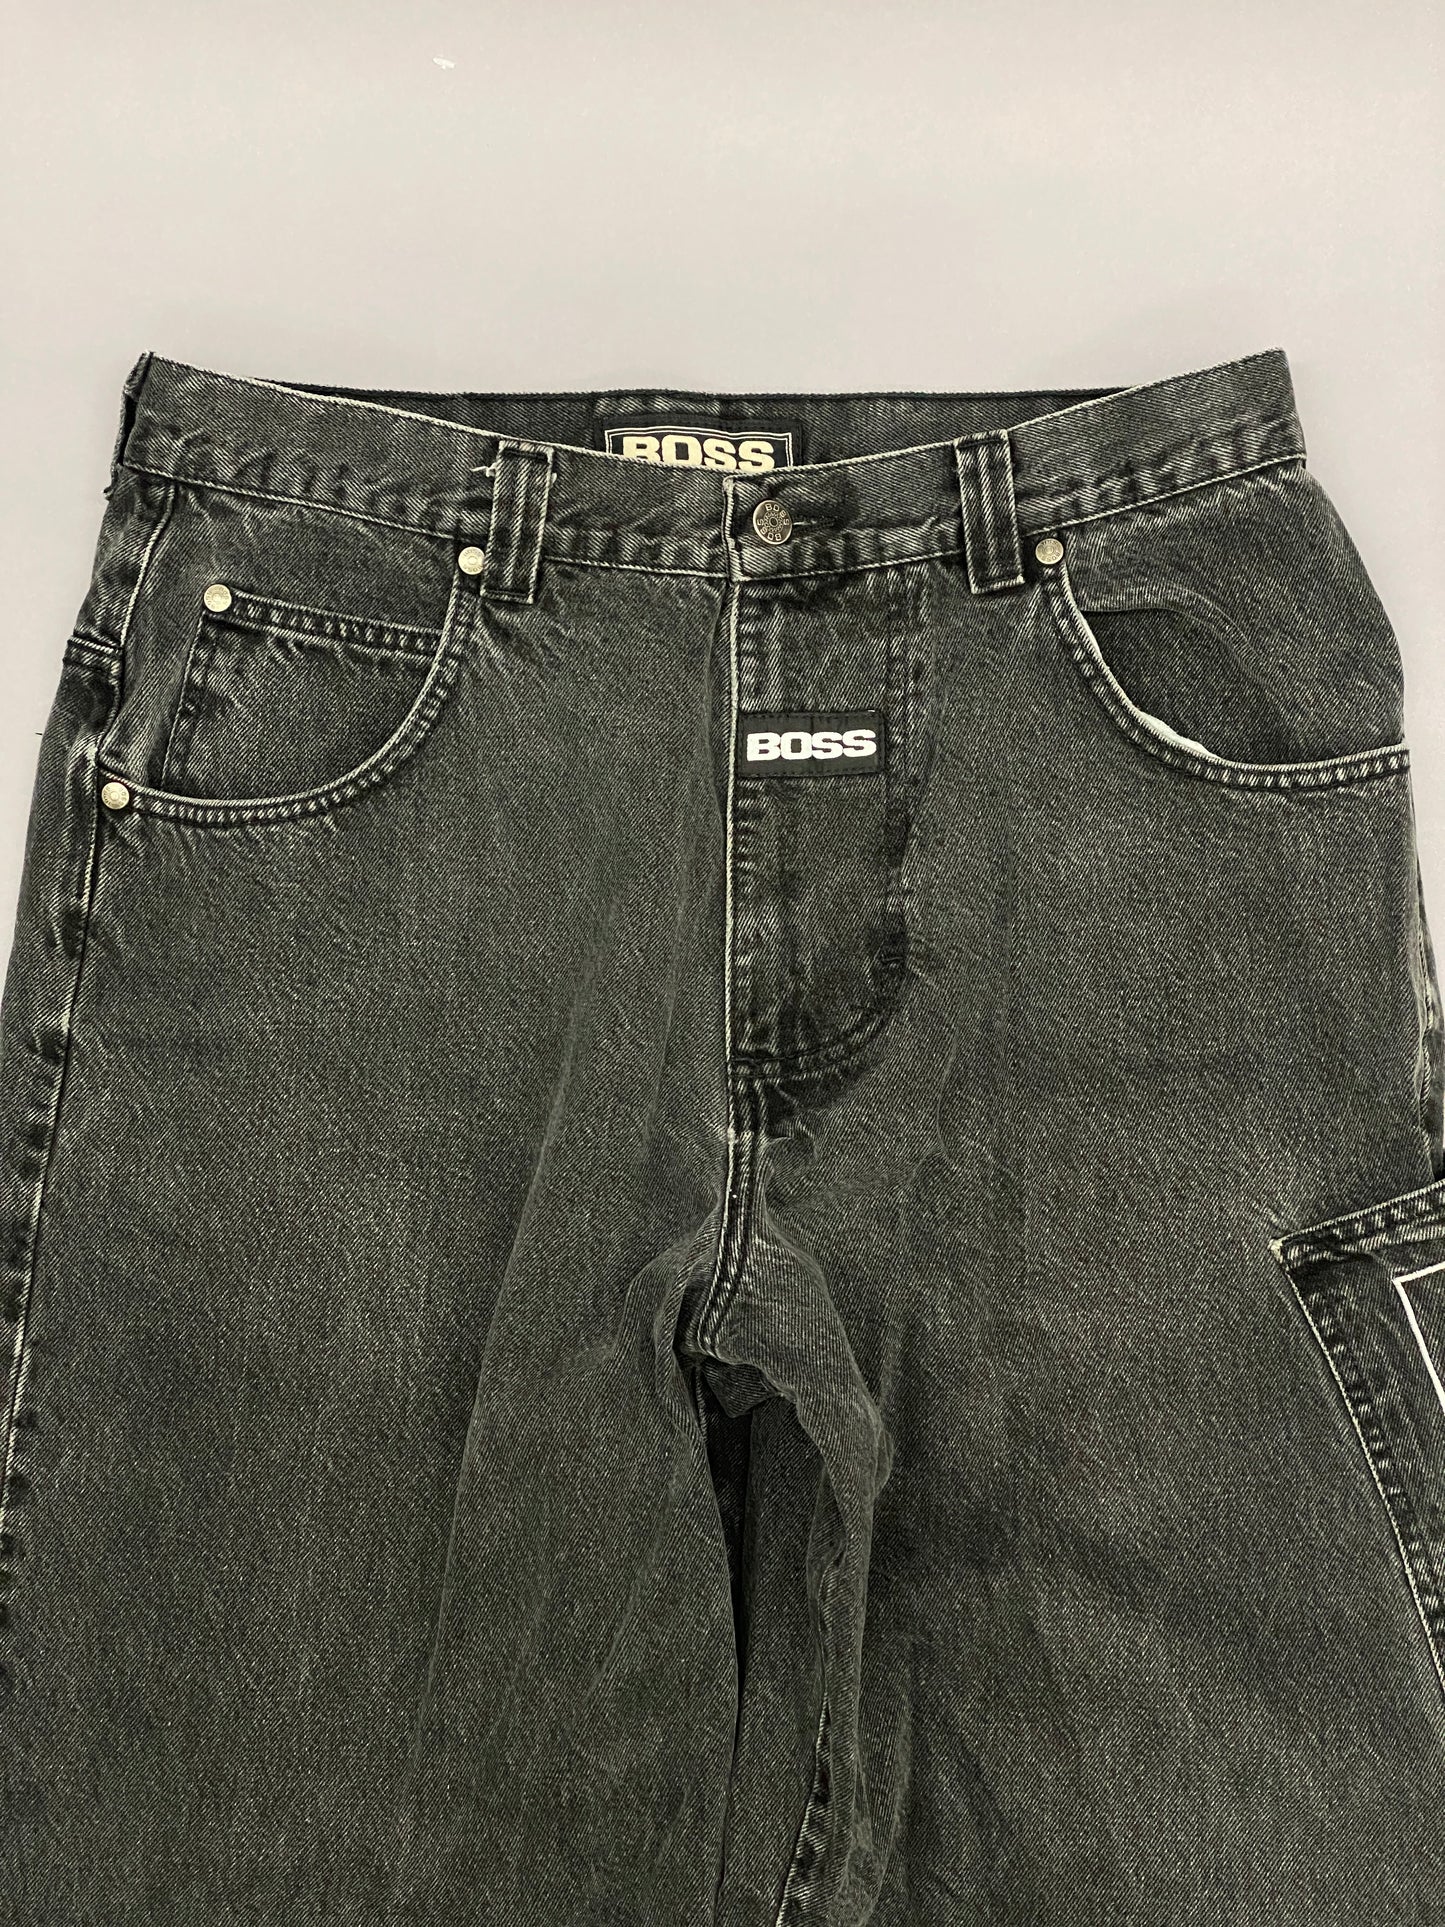 BOSS Vintage Baggy Jeans - 36